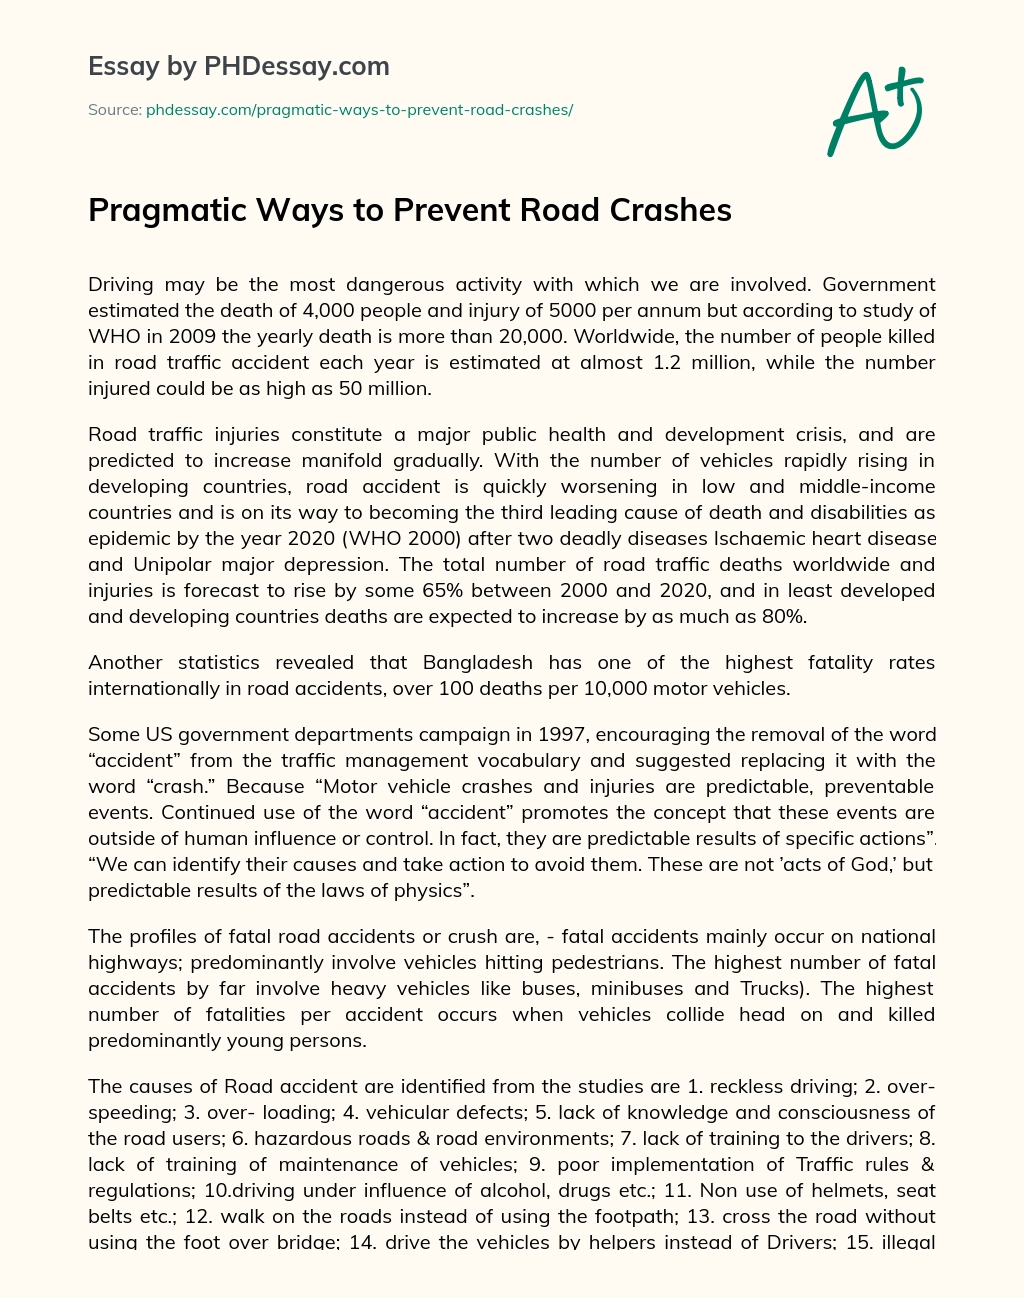 Pragmatic Ways to Prevent Road Crashes essay